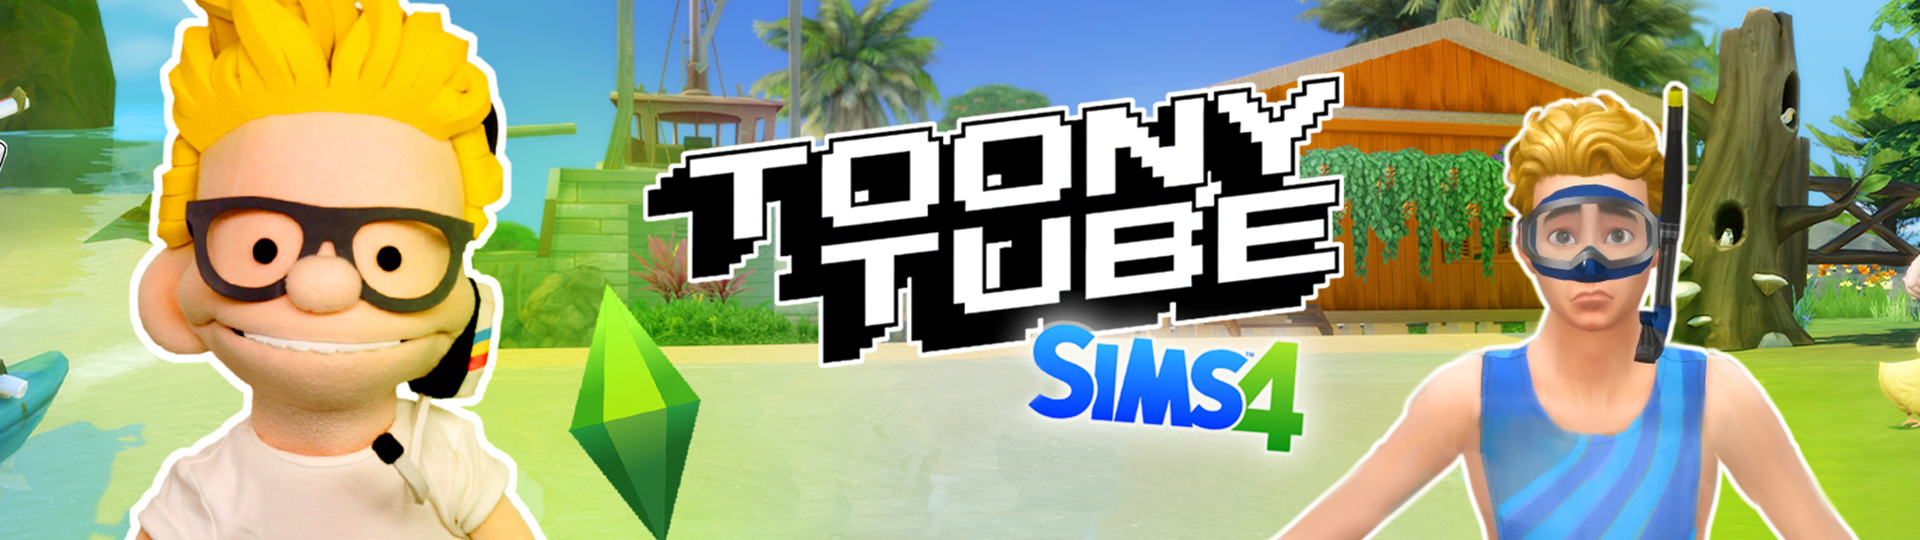 Toony Sims4